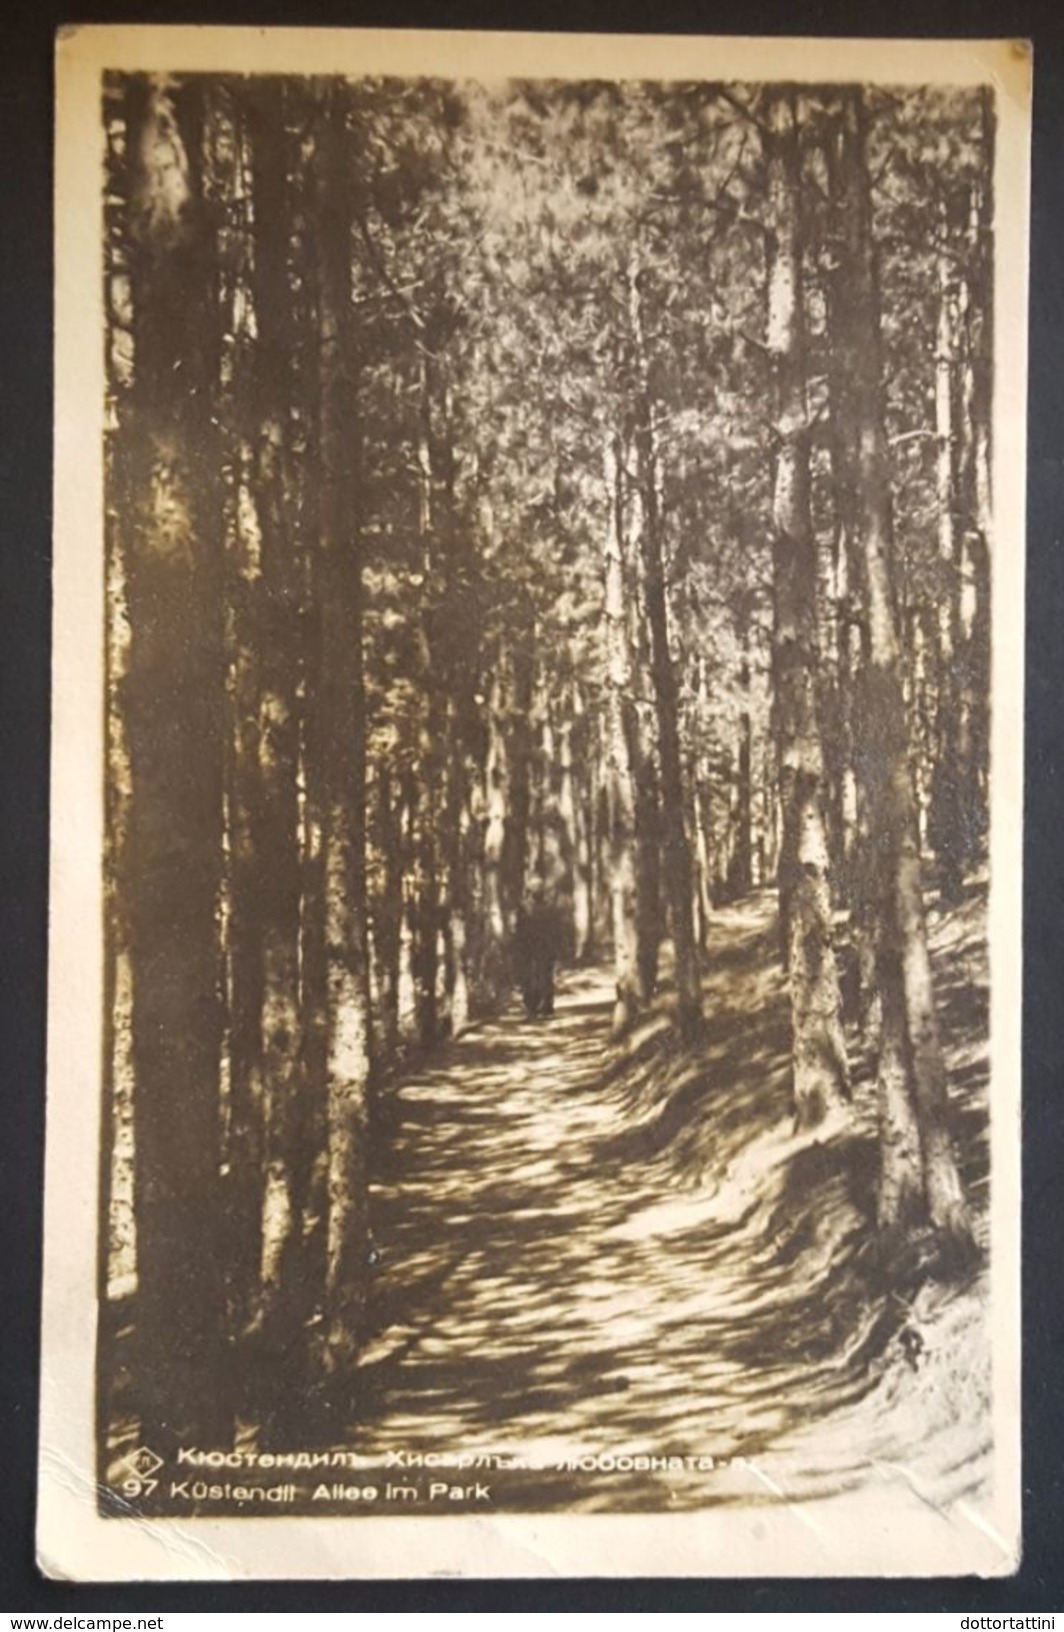 Kyustendil Kyoustendil Kjustendil - Bulgaria - Allee Im Park - Trees Wood Nv 1940 - Bulgaria